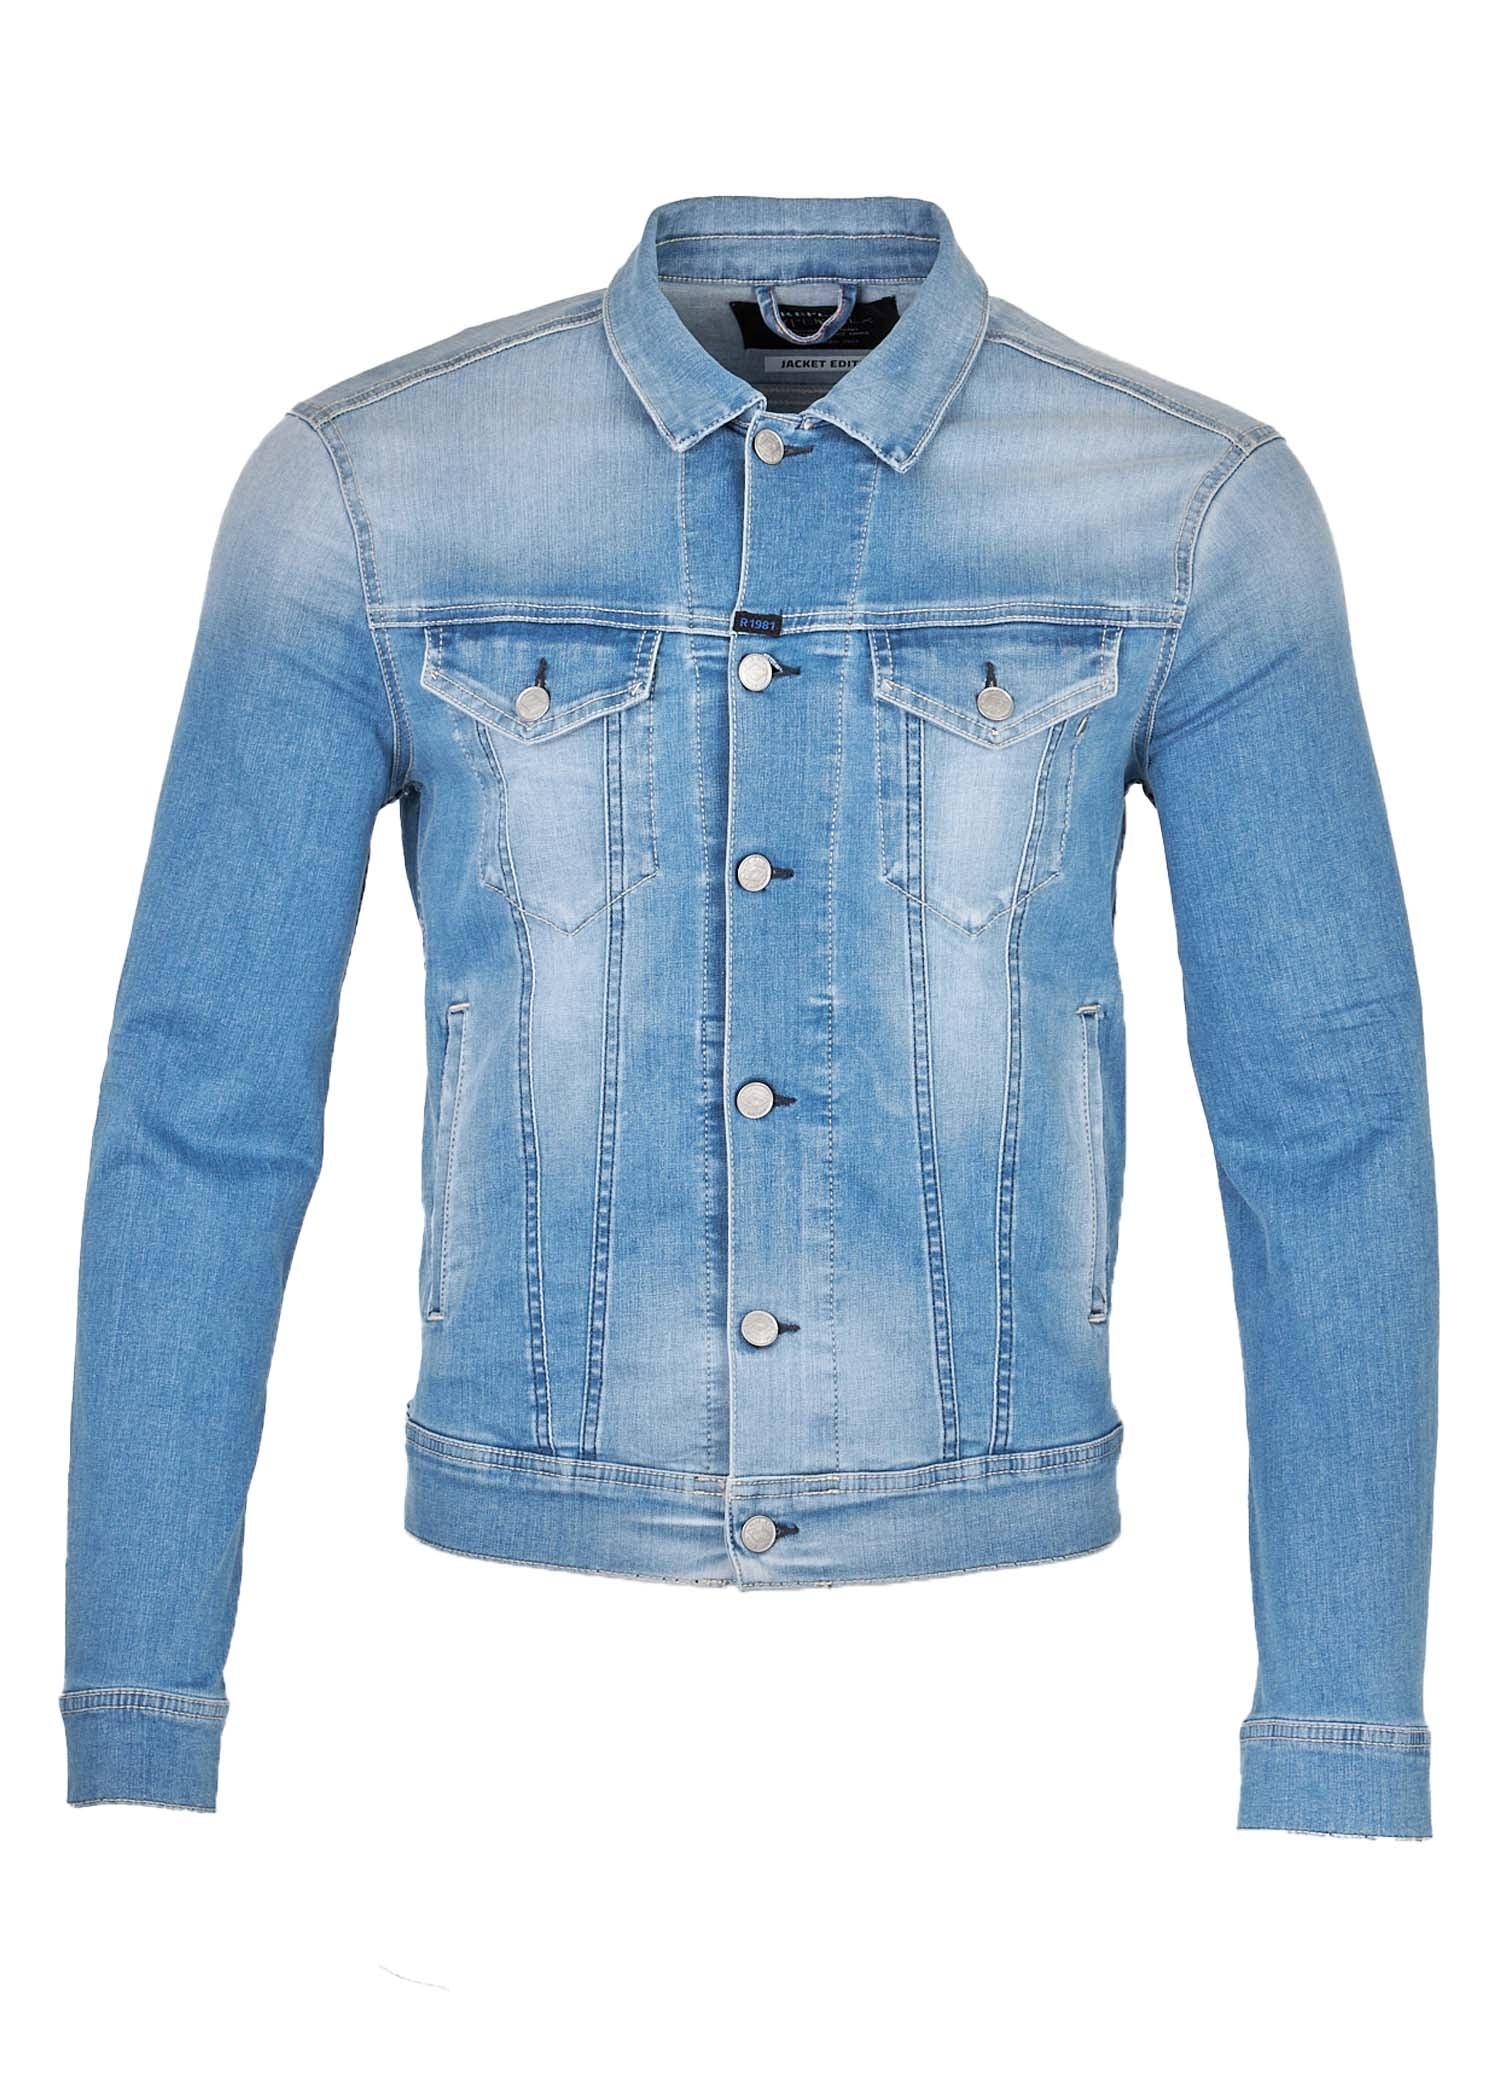 Replay Hyperflex Denim Jacket In Stonewash in Blue for Men | Lyst